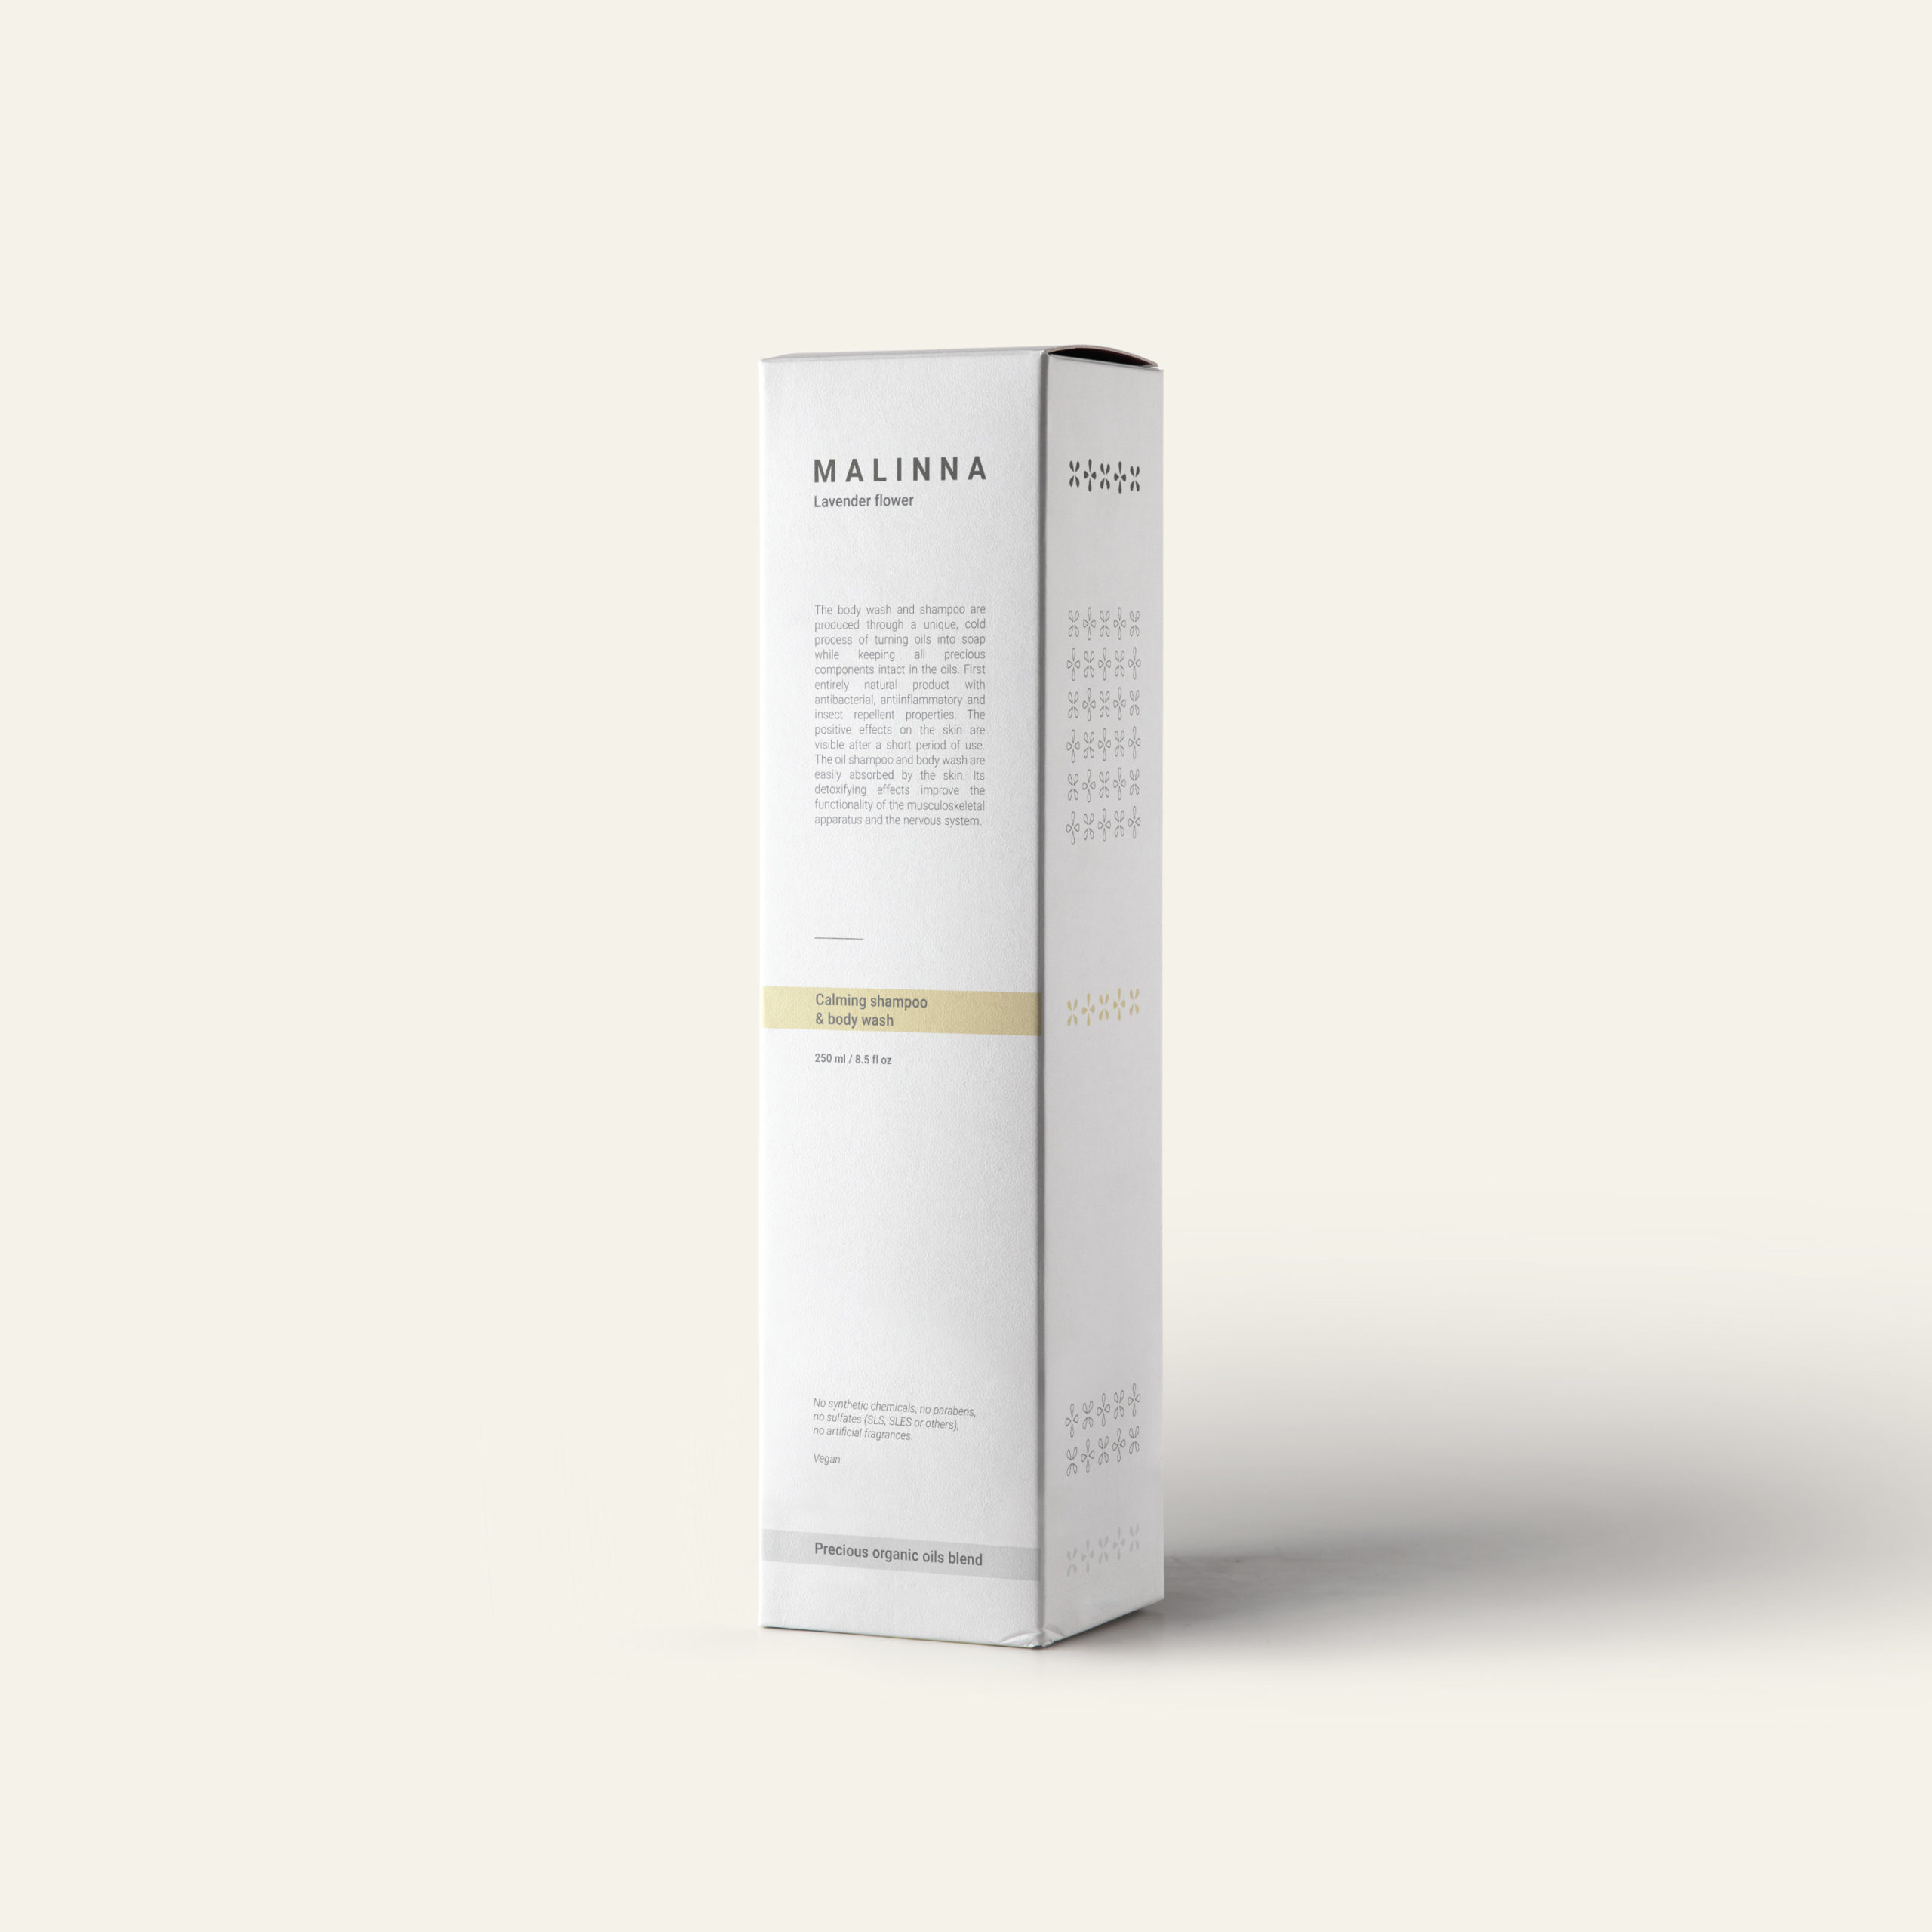 Package design for Malinna shampoo (© Frederik Smal)